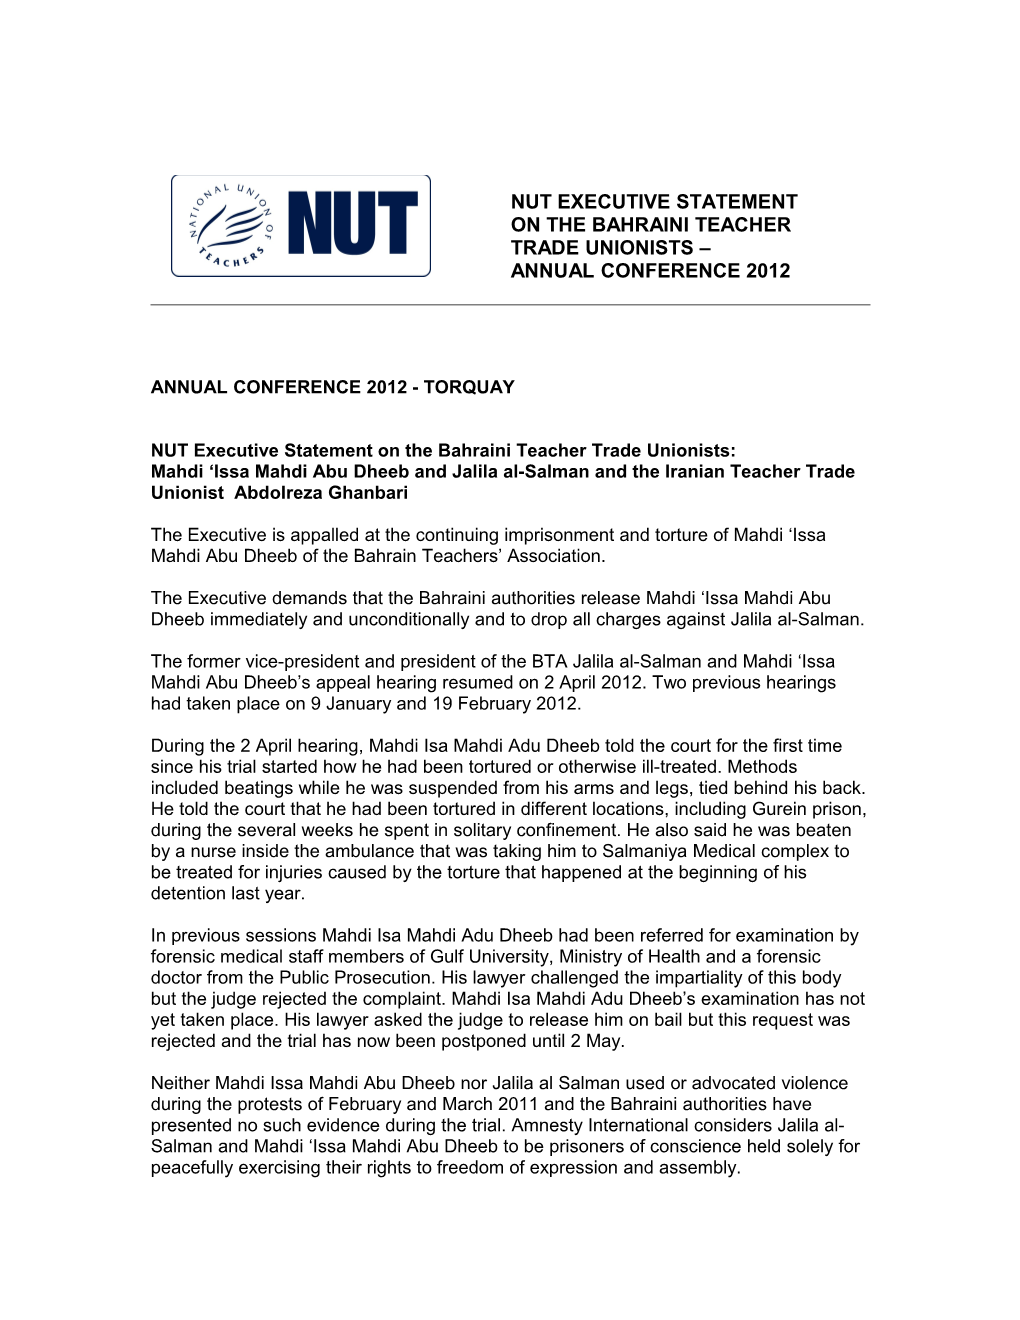 NUT Executive Statement on the Bahraini Teacher Trade Unionists